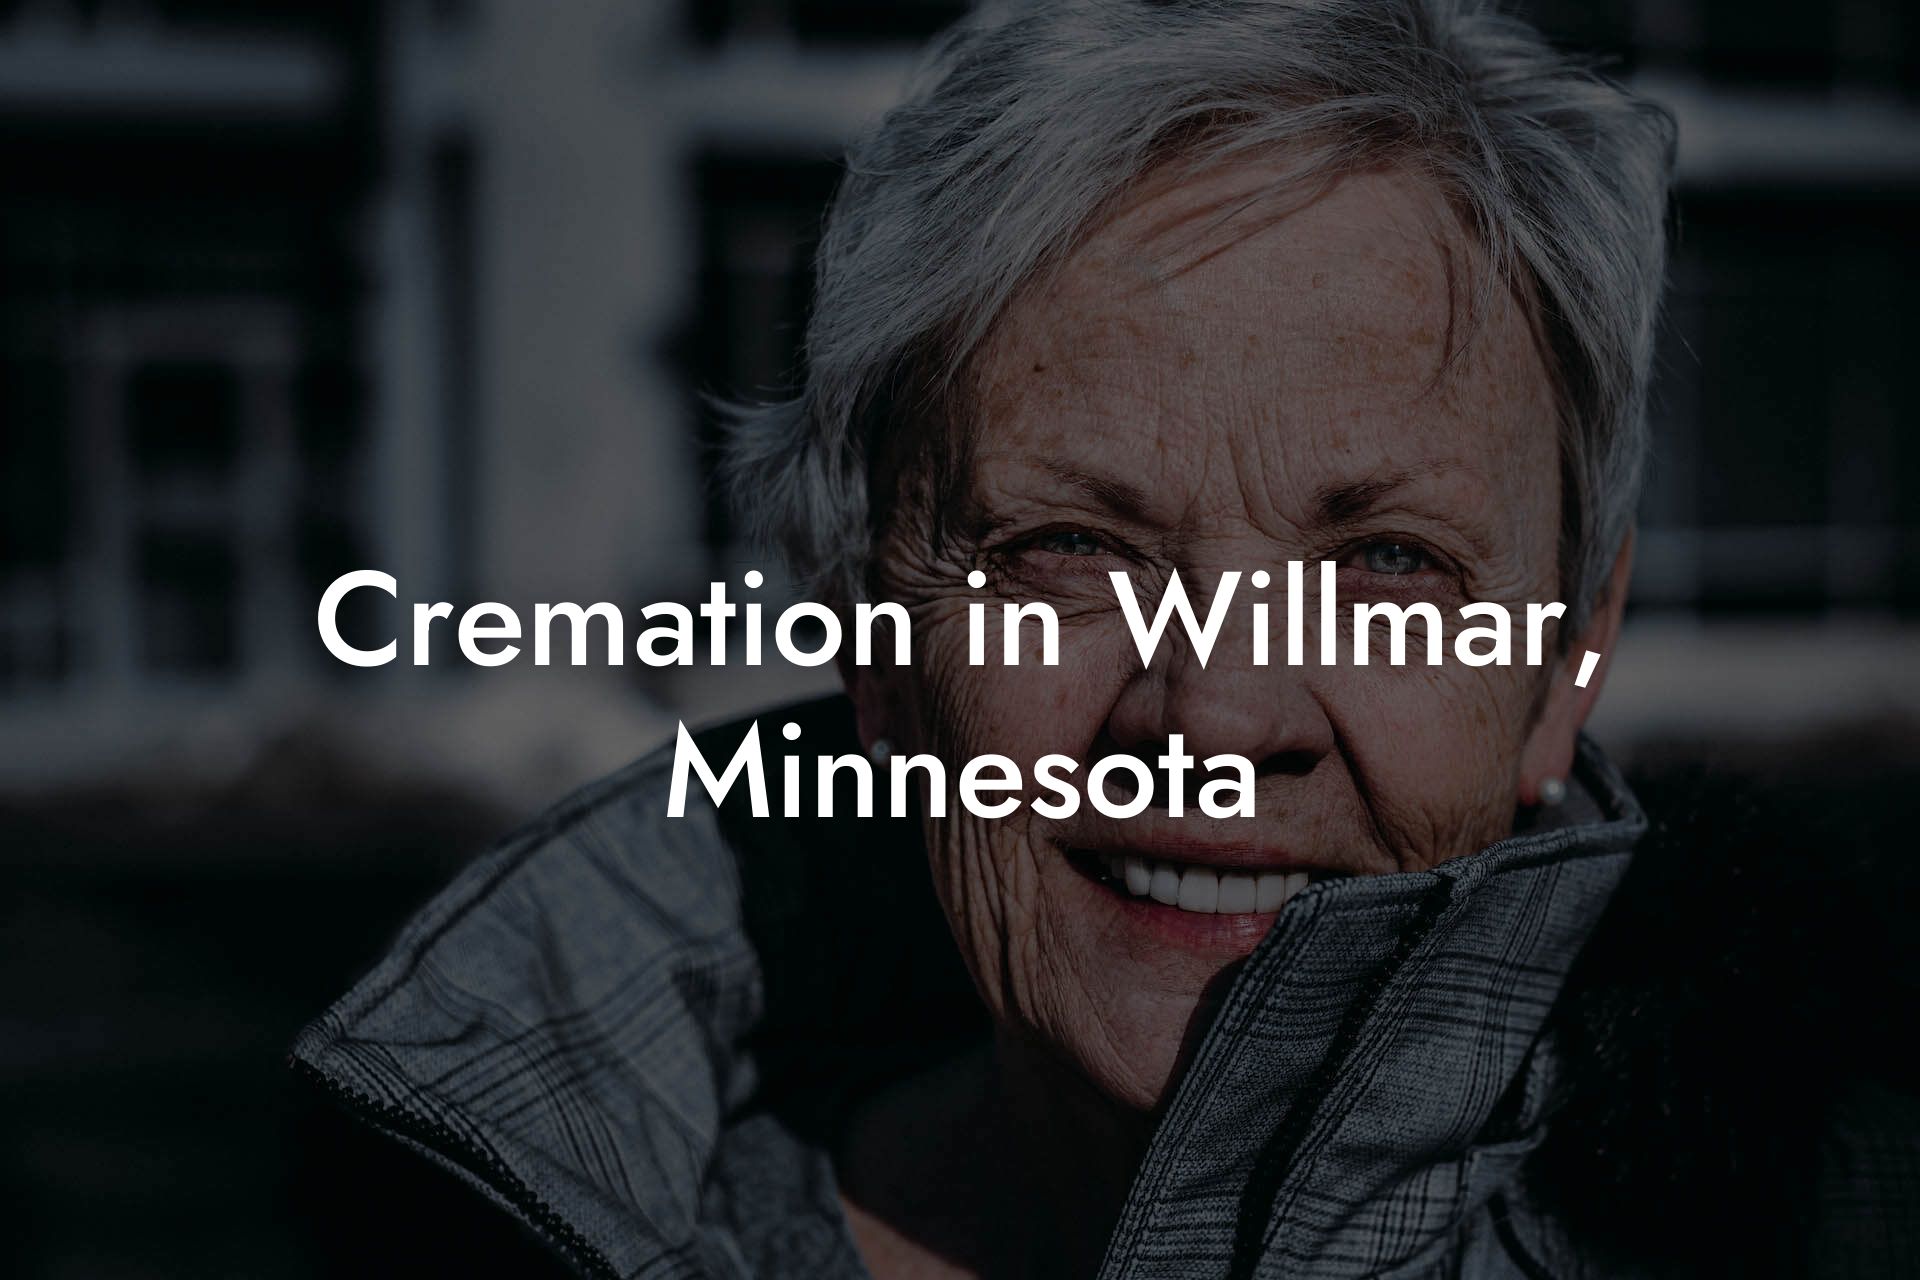 Cremation in Willmar, Minnesota